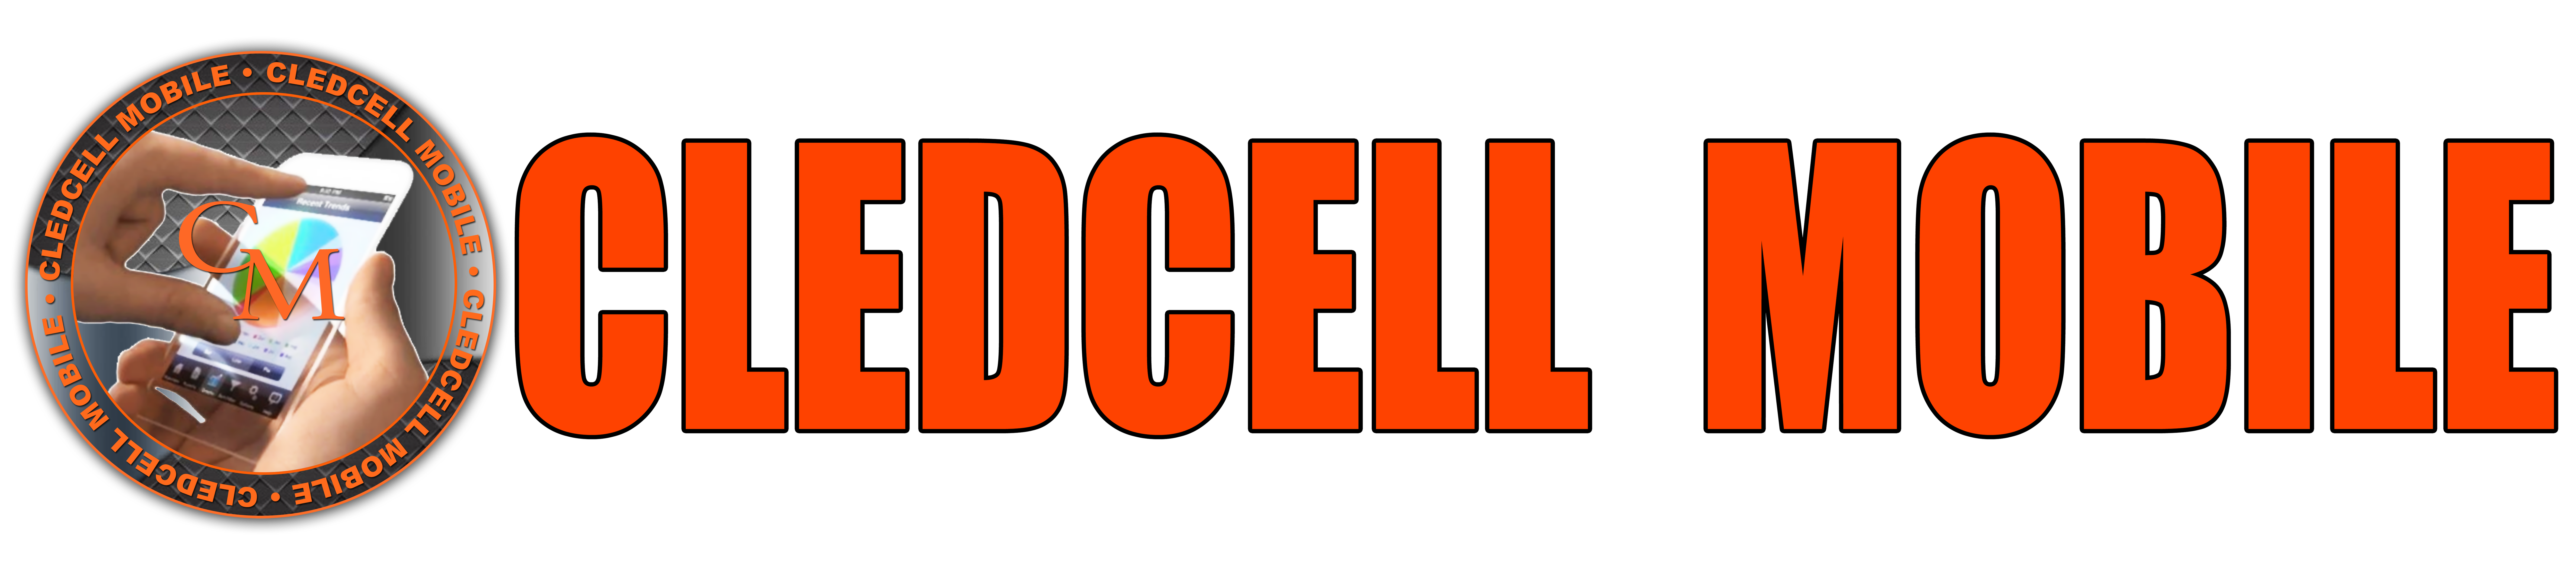 CLEDCELL MOBILE SHOP